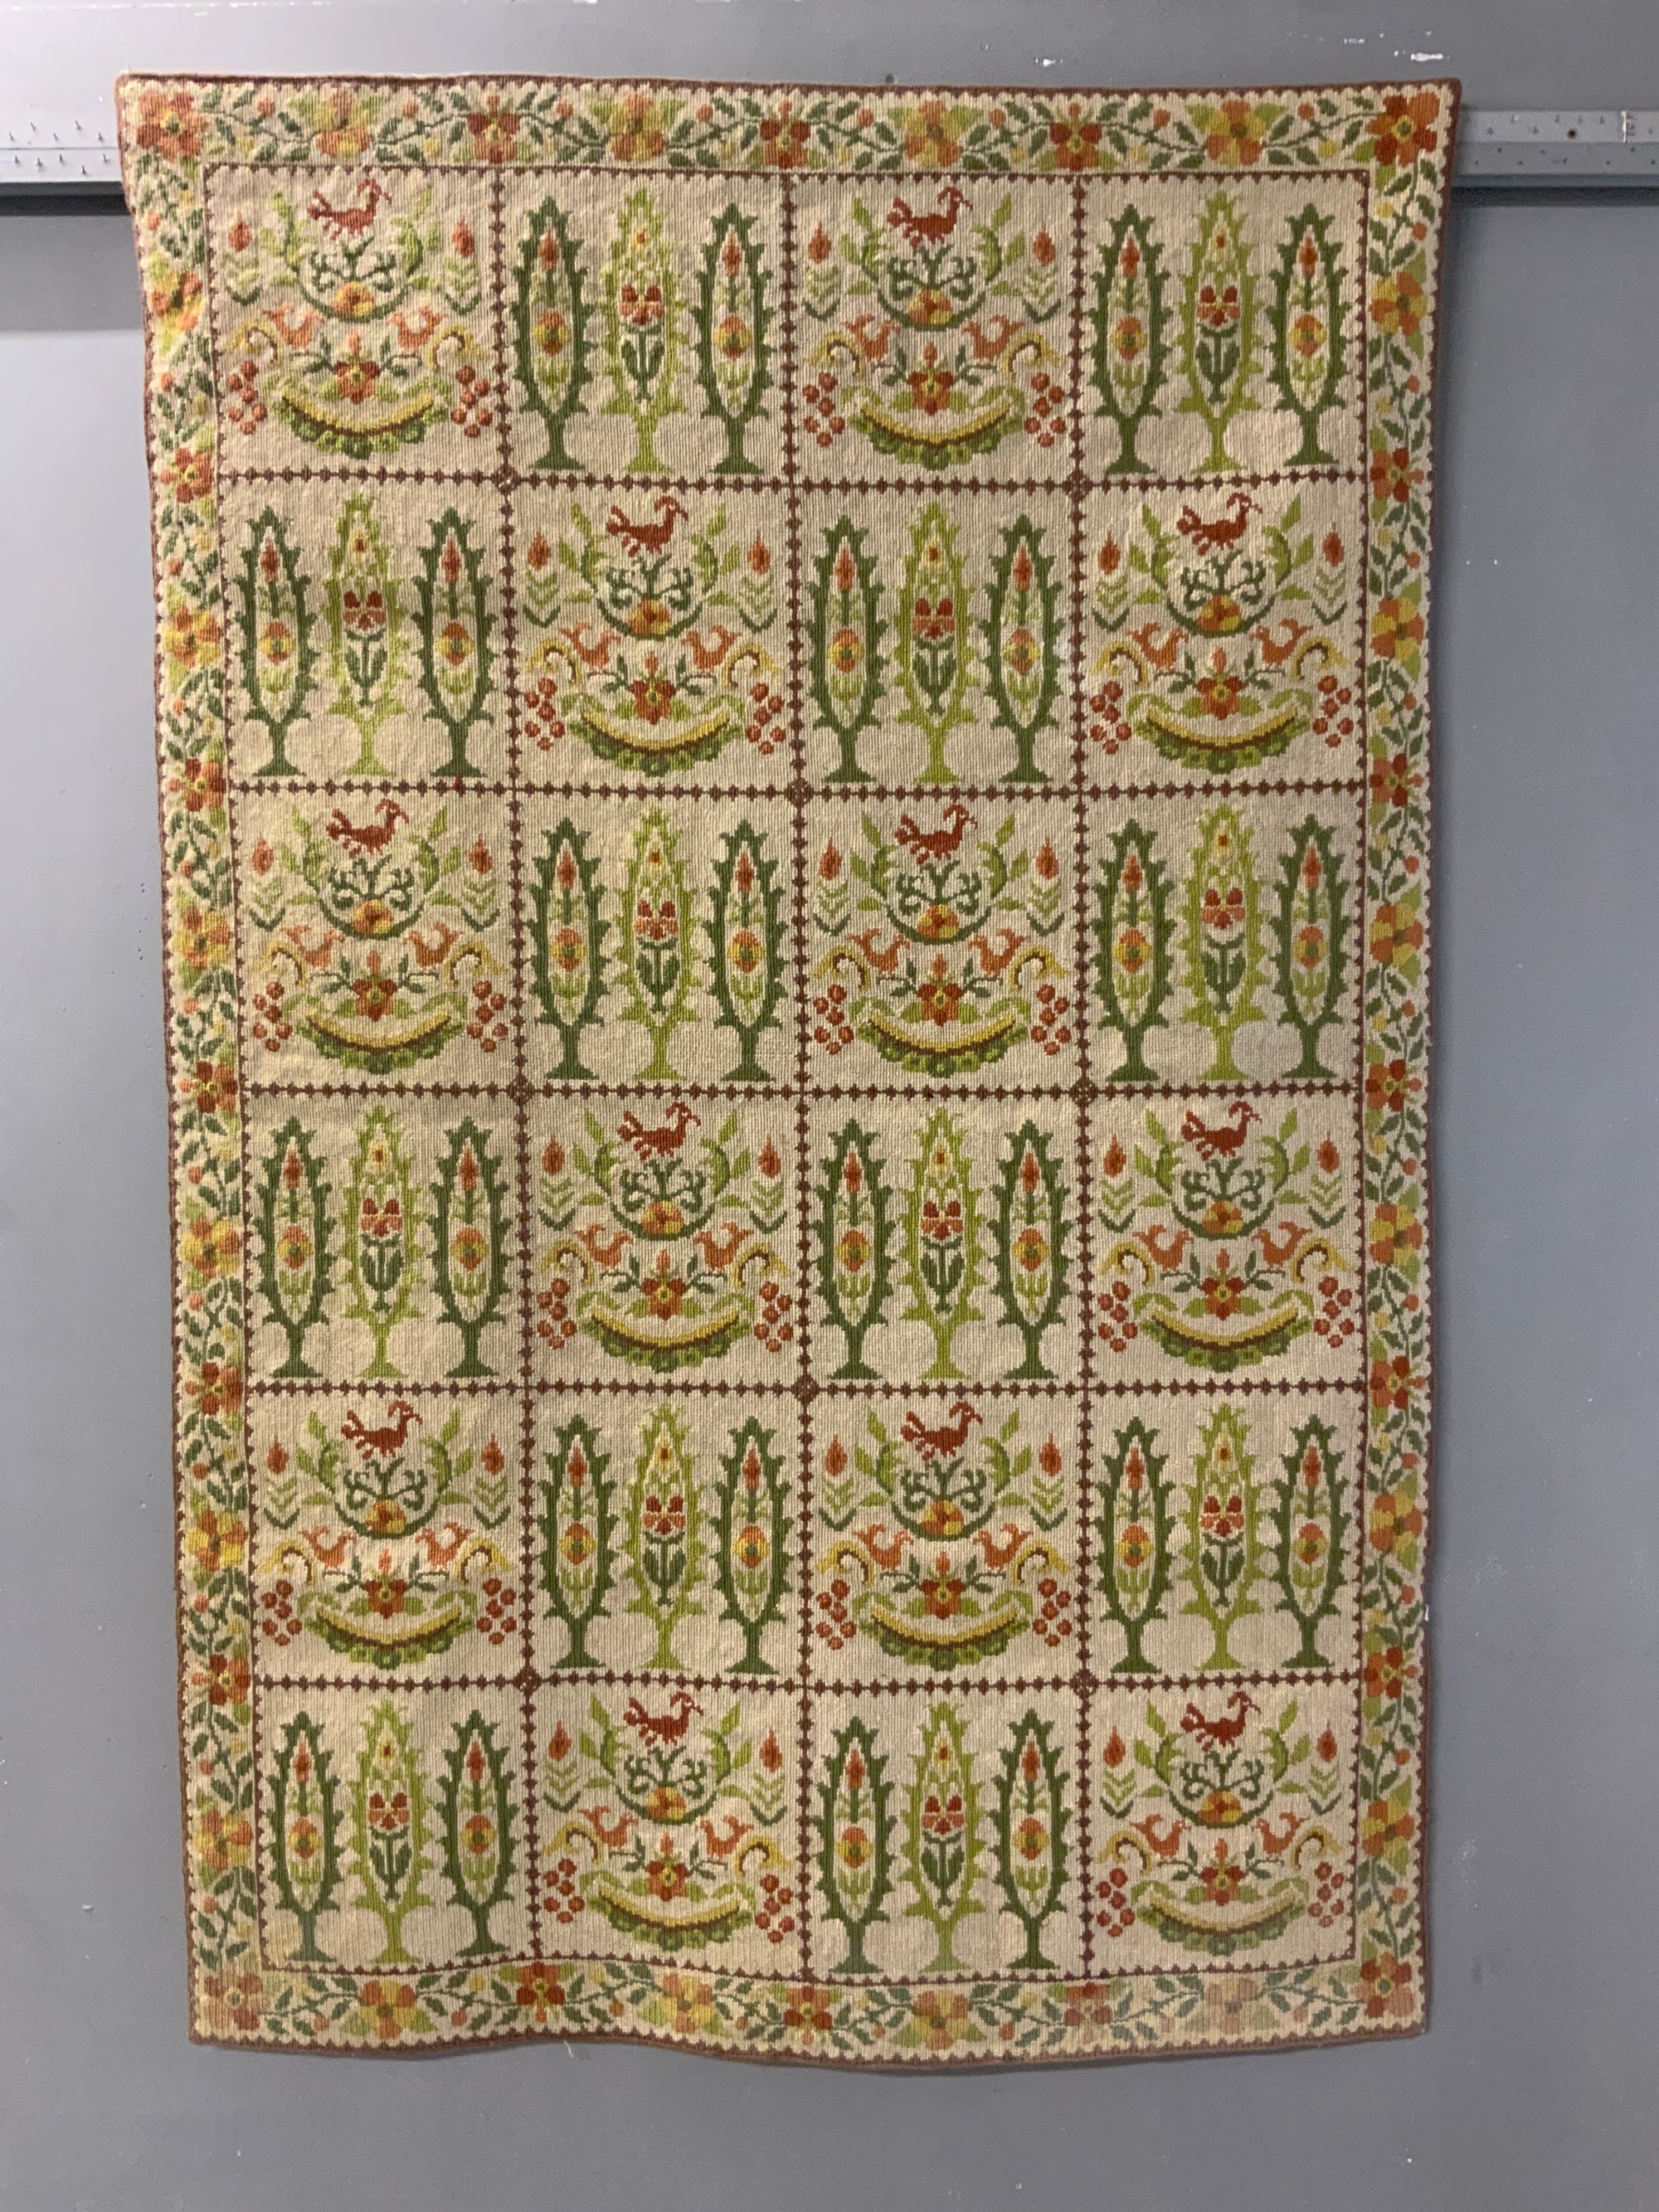 European needlework rug (170 x 111cm)